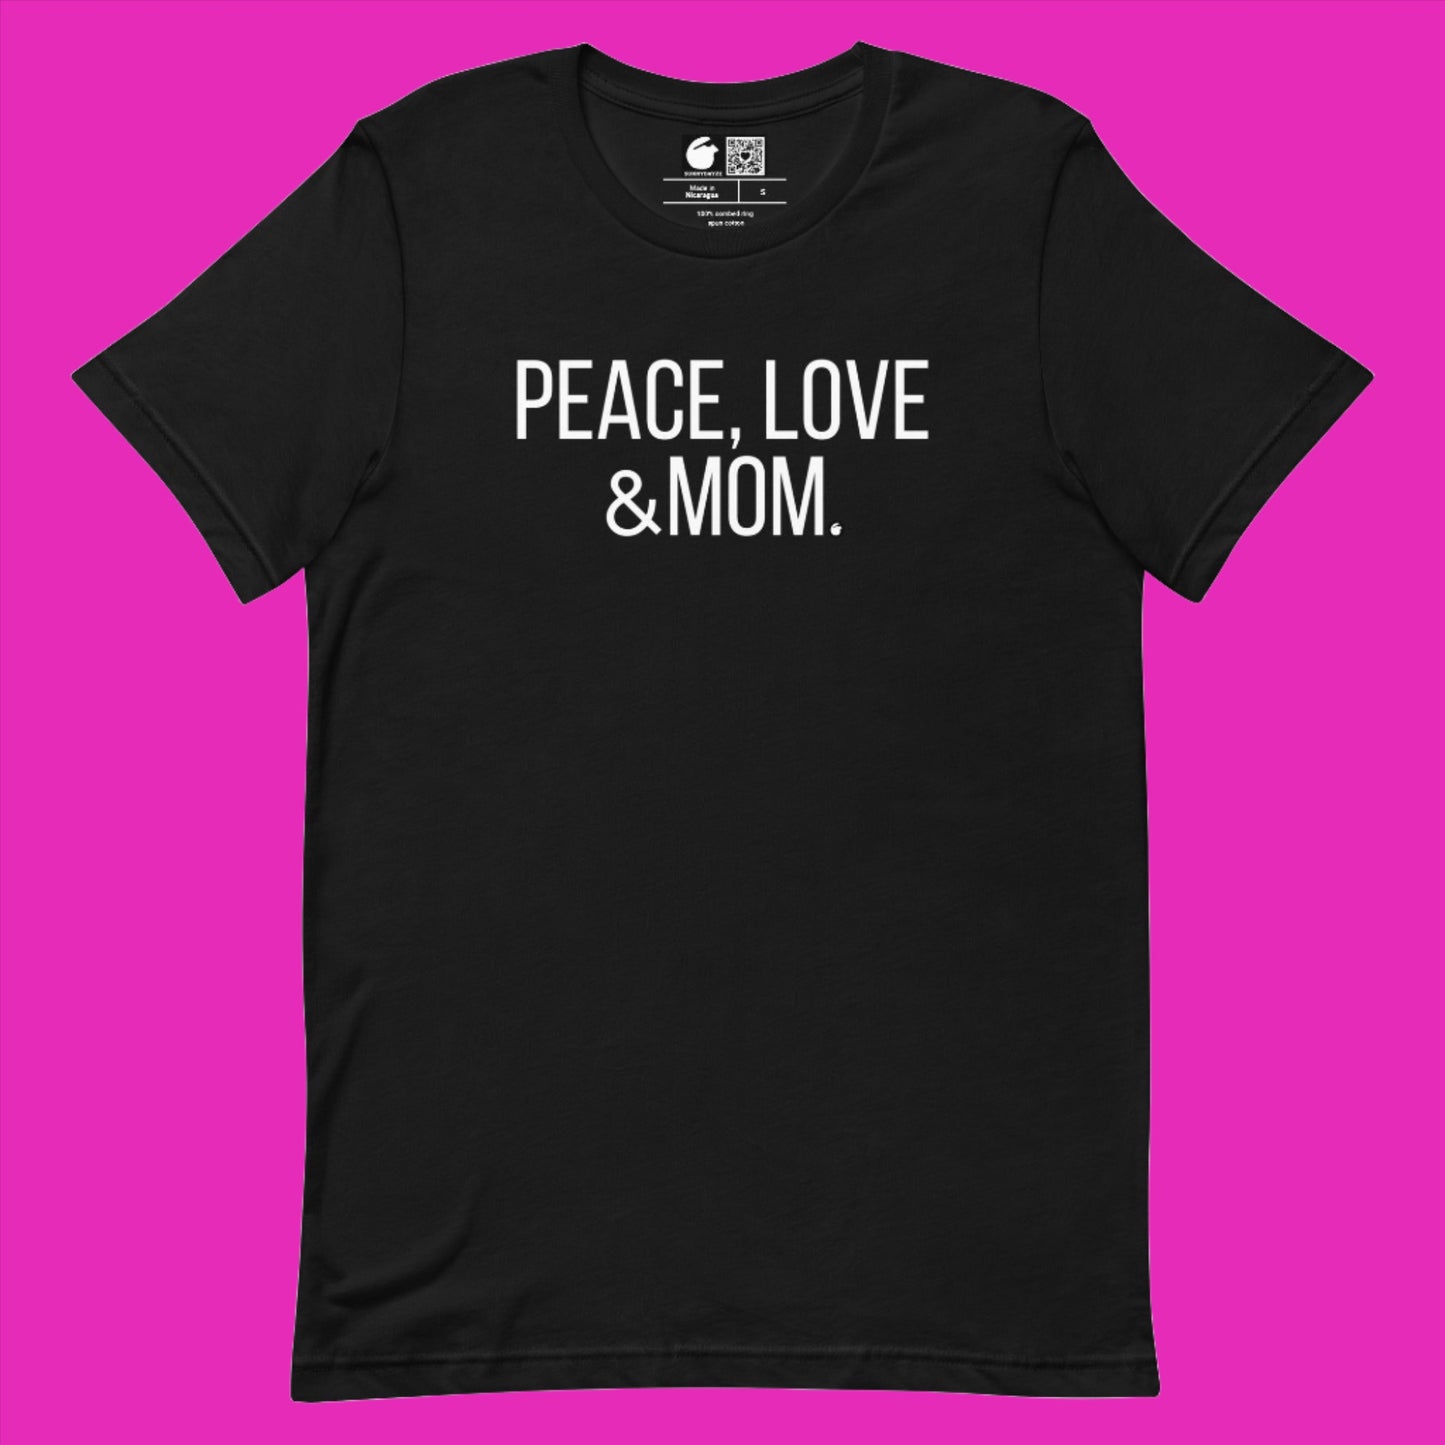 MOM Short-Sleeve Unisex t-shirt